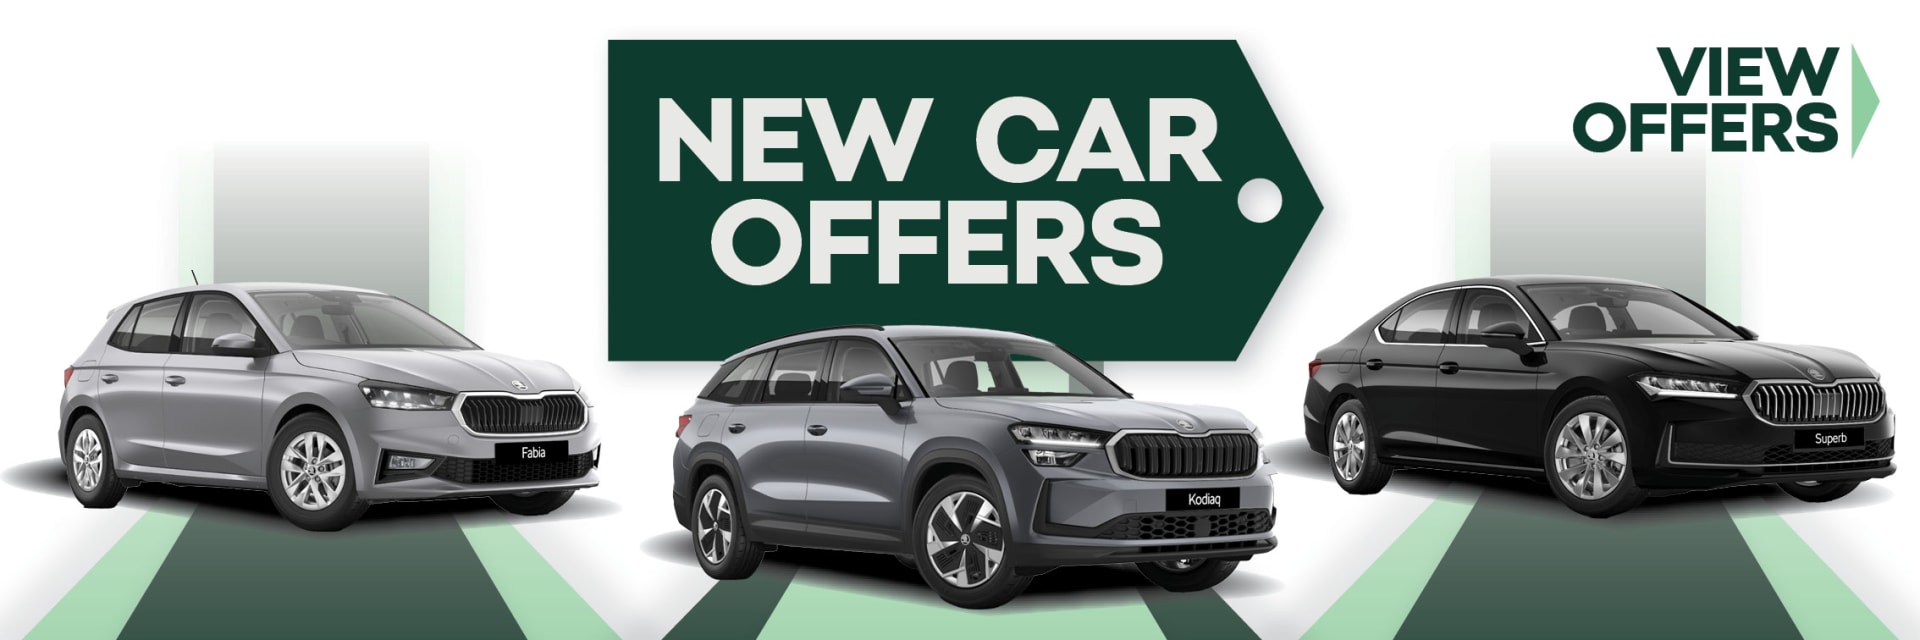 Skoda New Car Offers